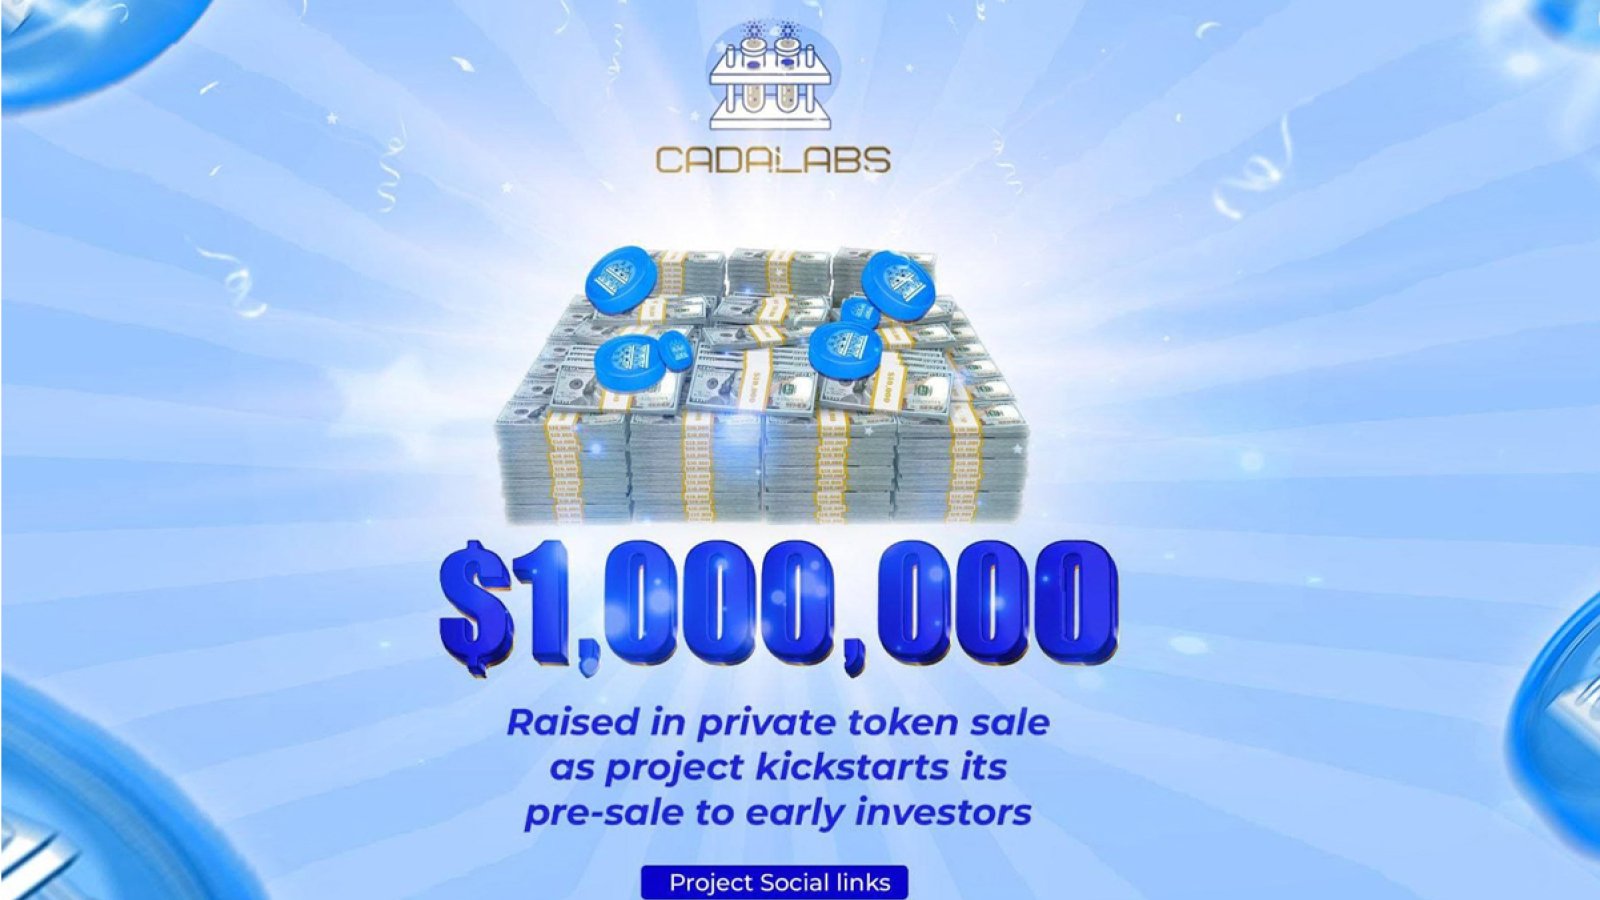 Cadalabs Project Kickstarts CALA Token Pre Sale After a Successful $1m Private Token Sale